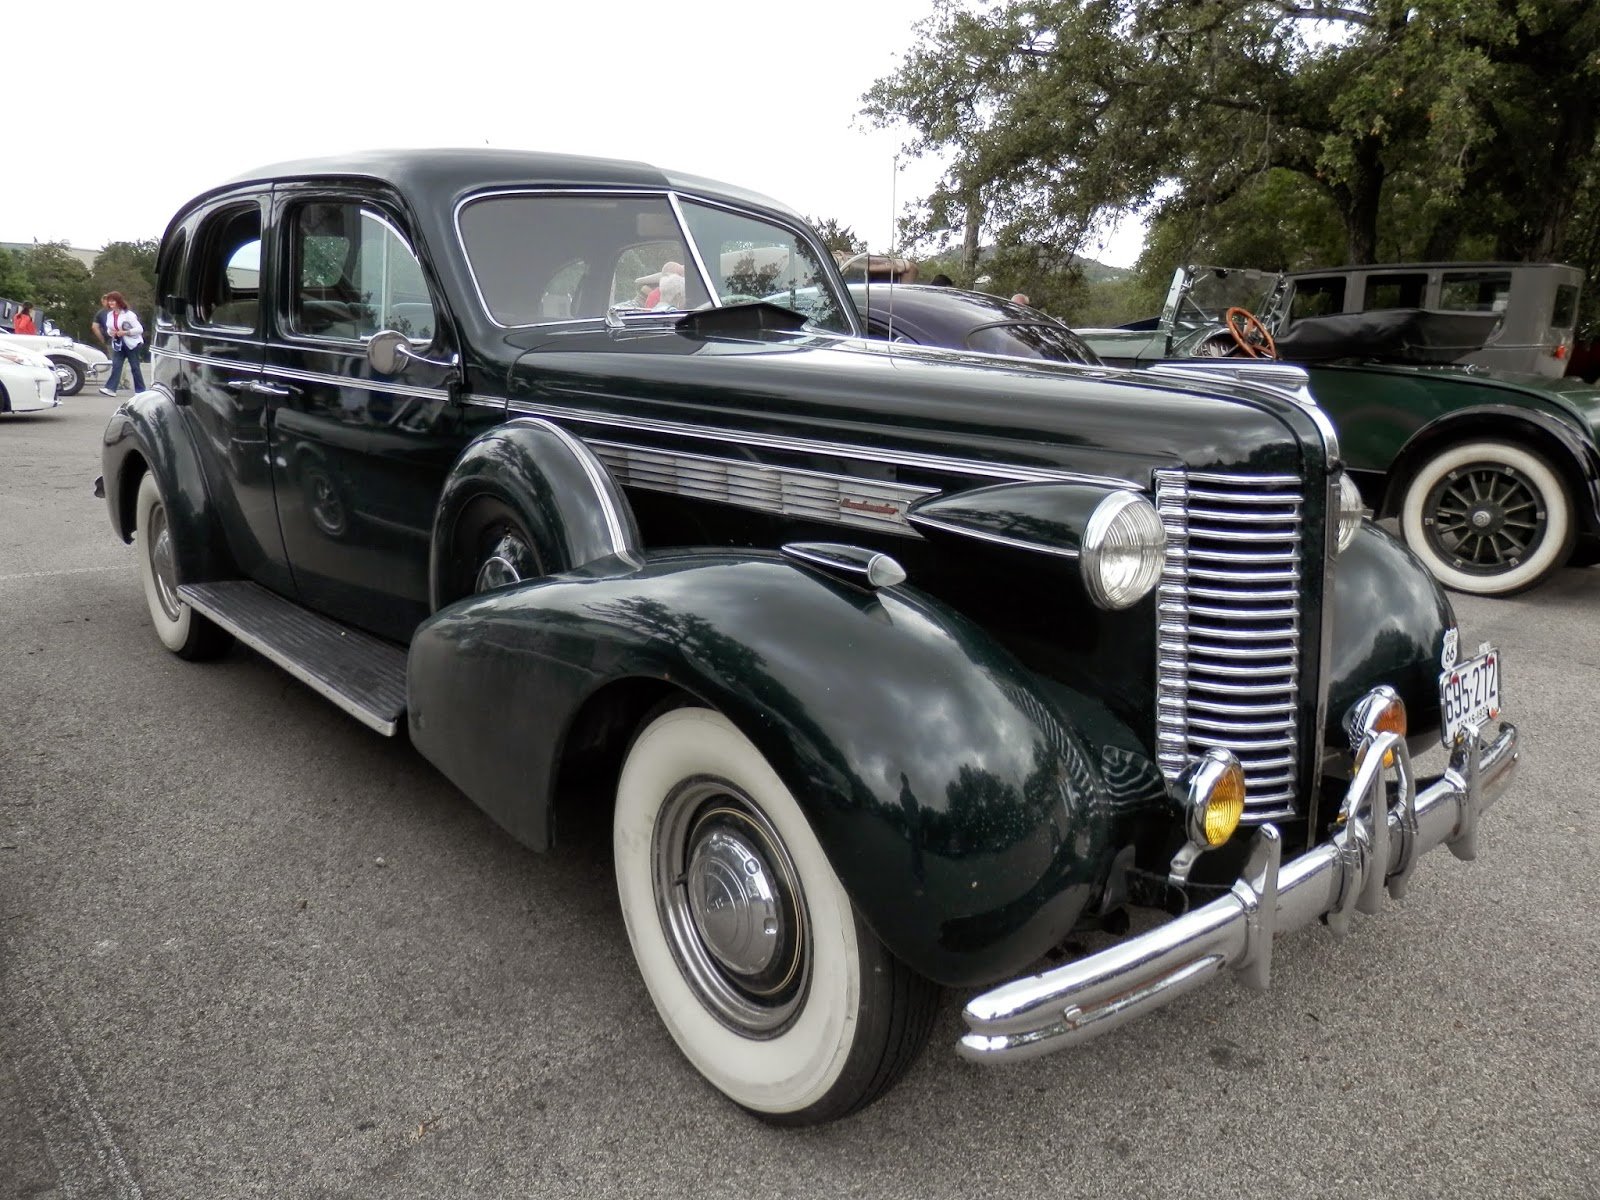 1938, Buick, Roadmaster, Sedan, 4, Door, Black, Classic, Old, Vintage, Usa, 1600x1200 01 Wallpaper